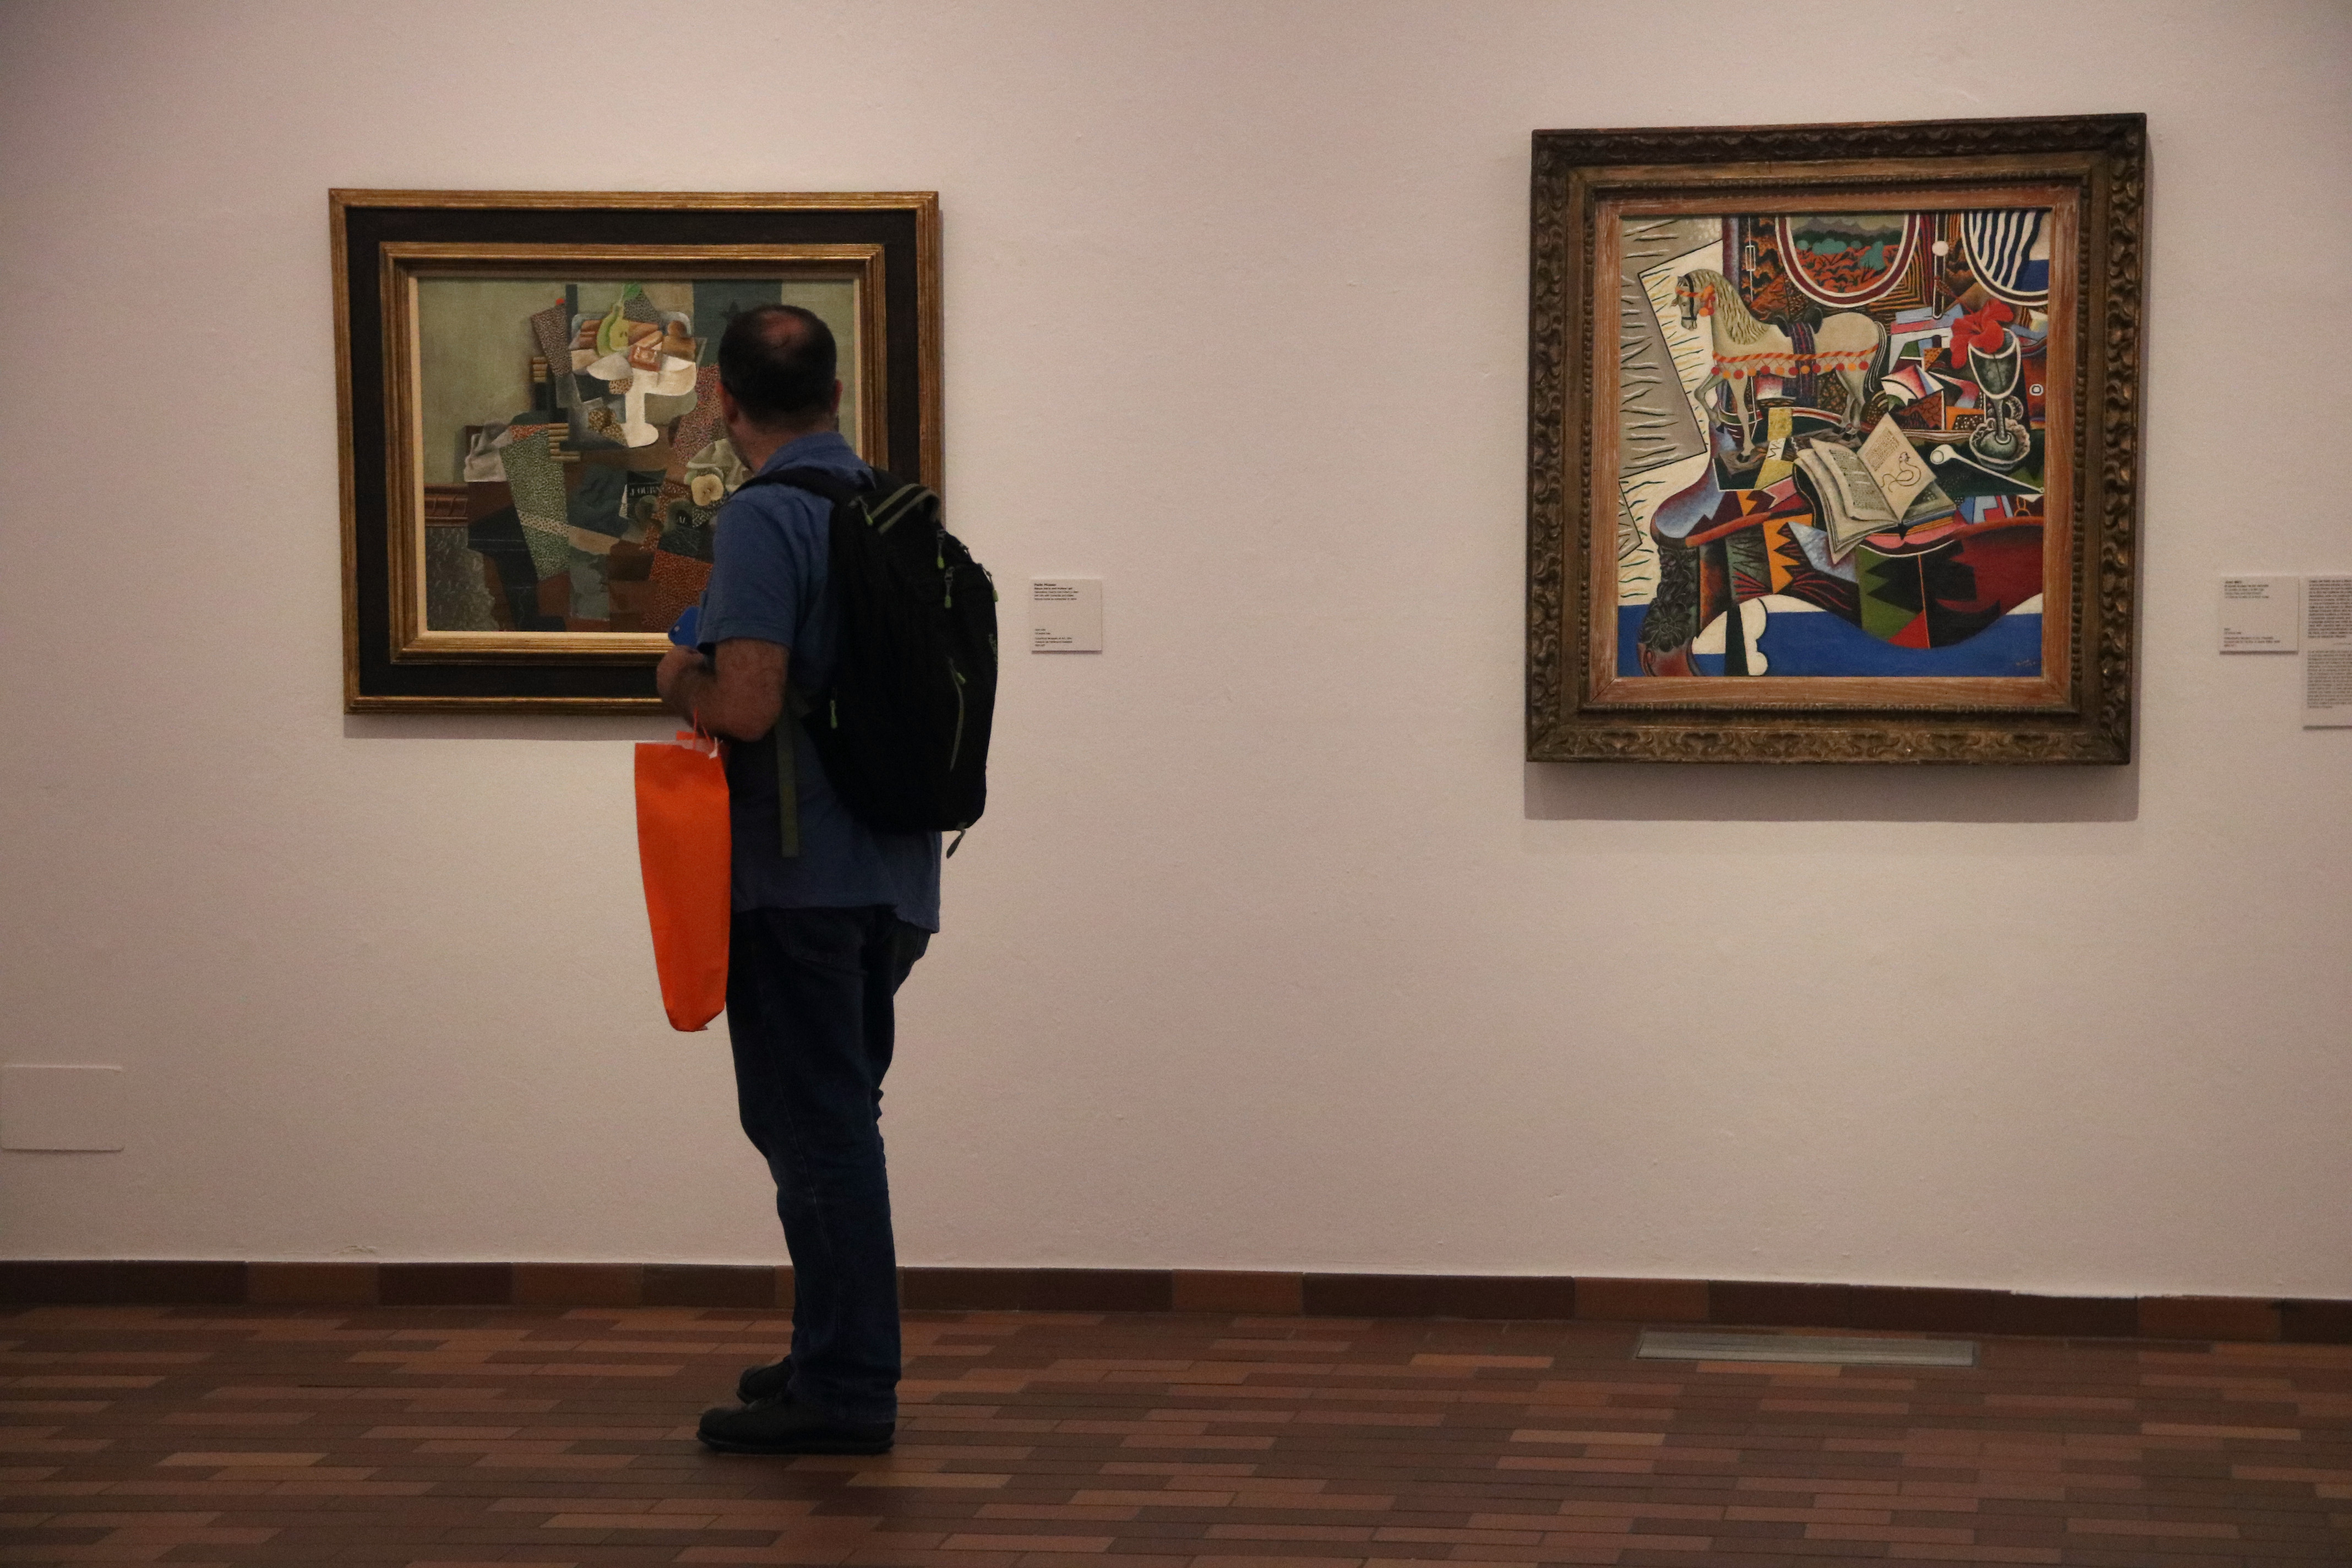 'Miró-Picasso' exhibition at the Fundació Joan Miró